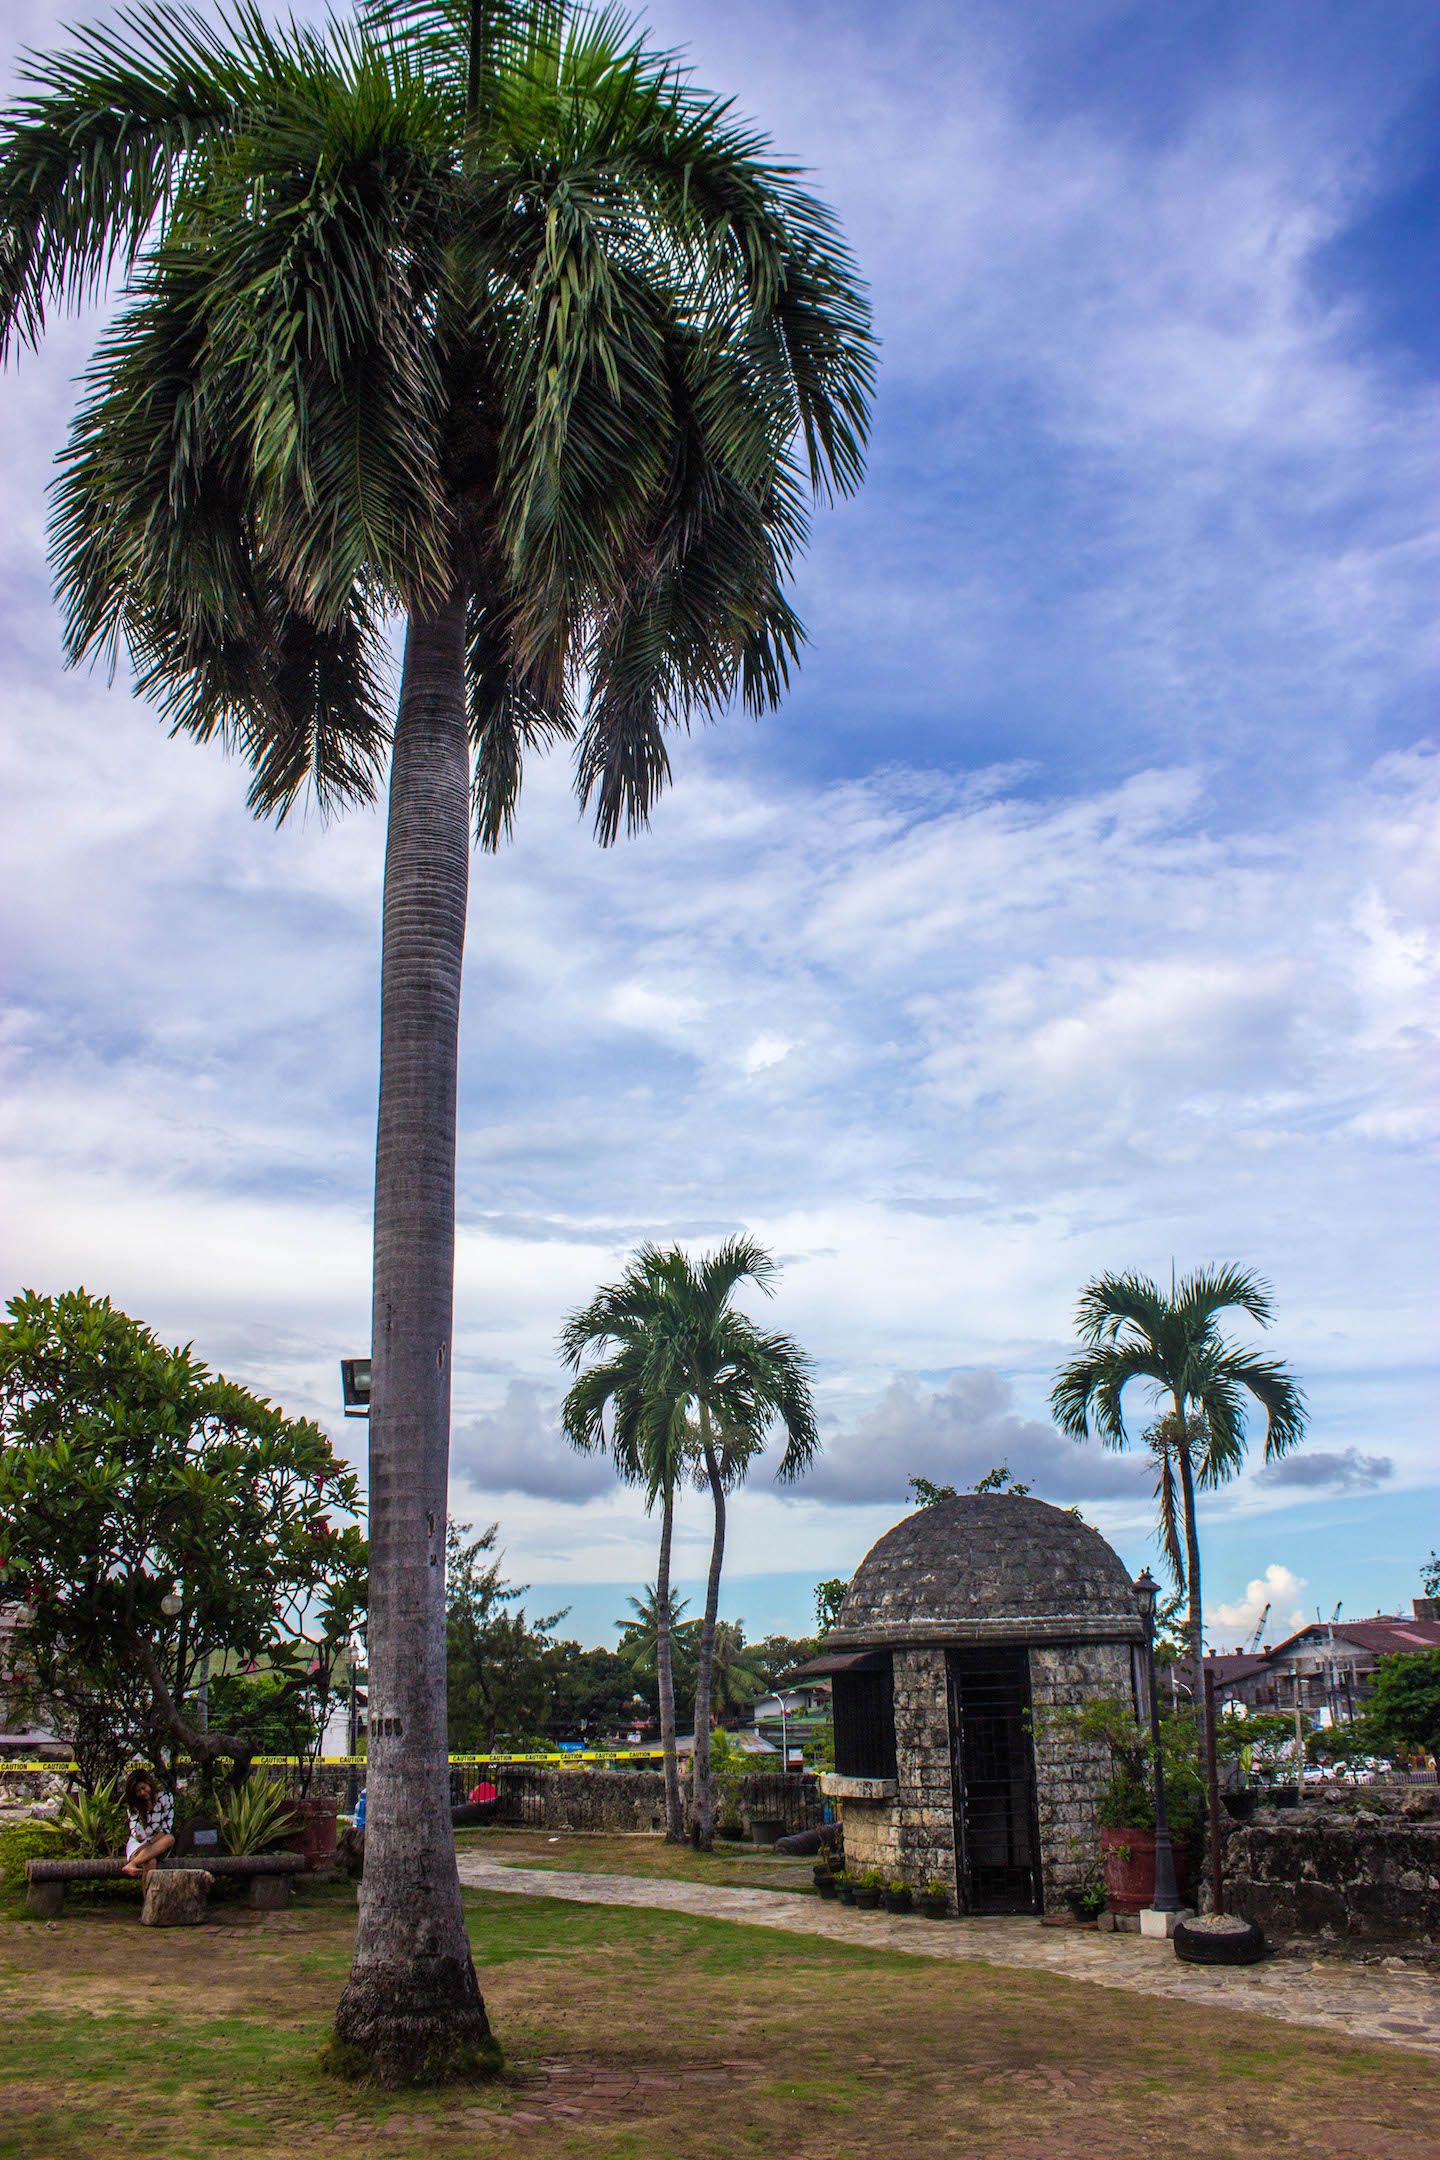 Walking along the walls of Fort San Pedro, Cebu, Philippines